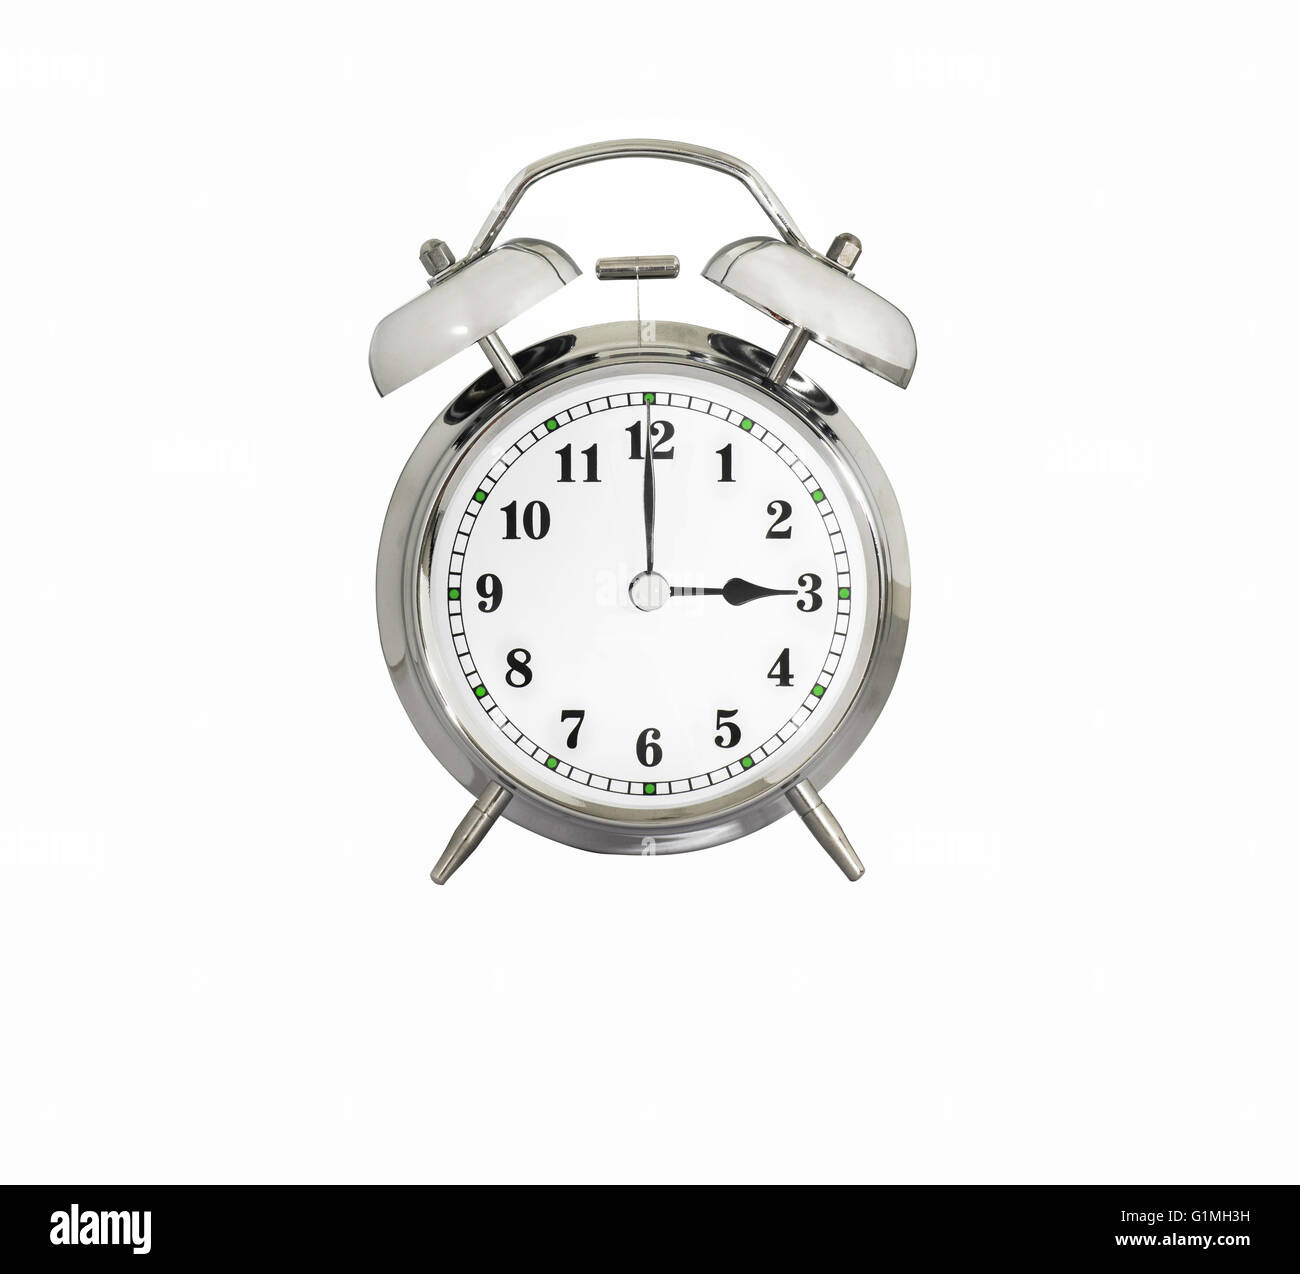 para castigar administrar Eficiente Clock 3 pm Imágenes recortadas de stock - Alamy